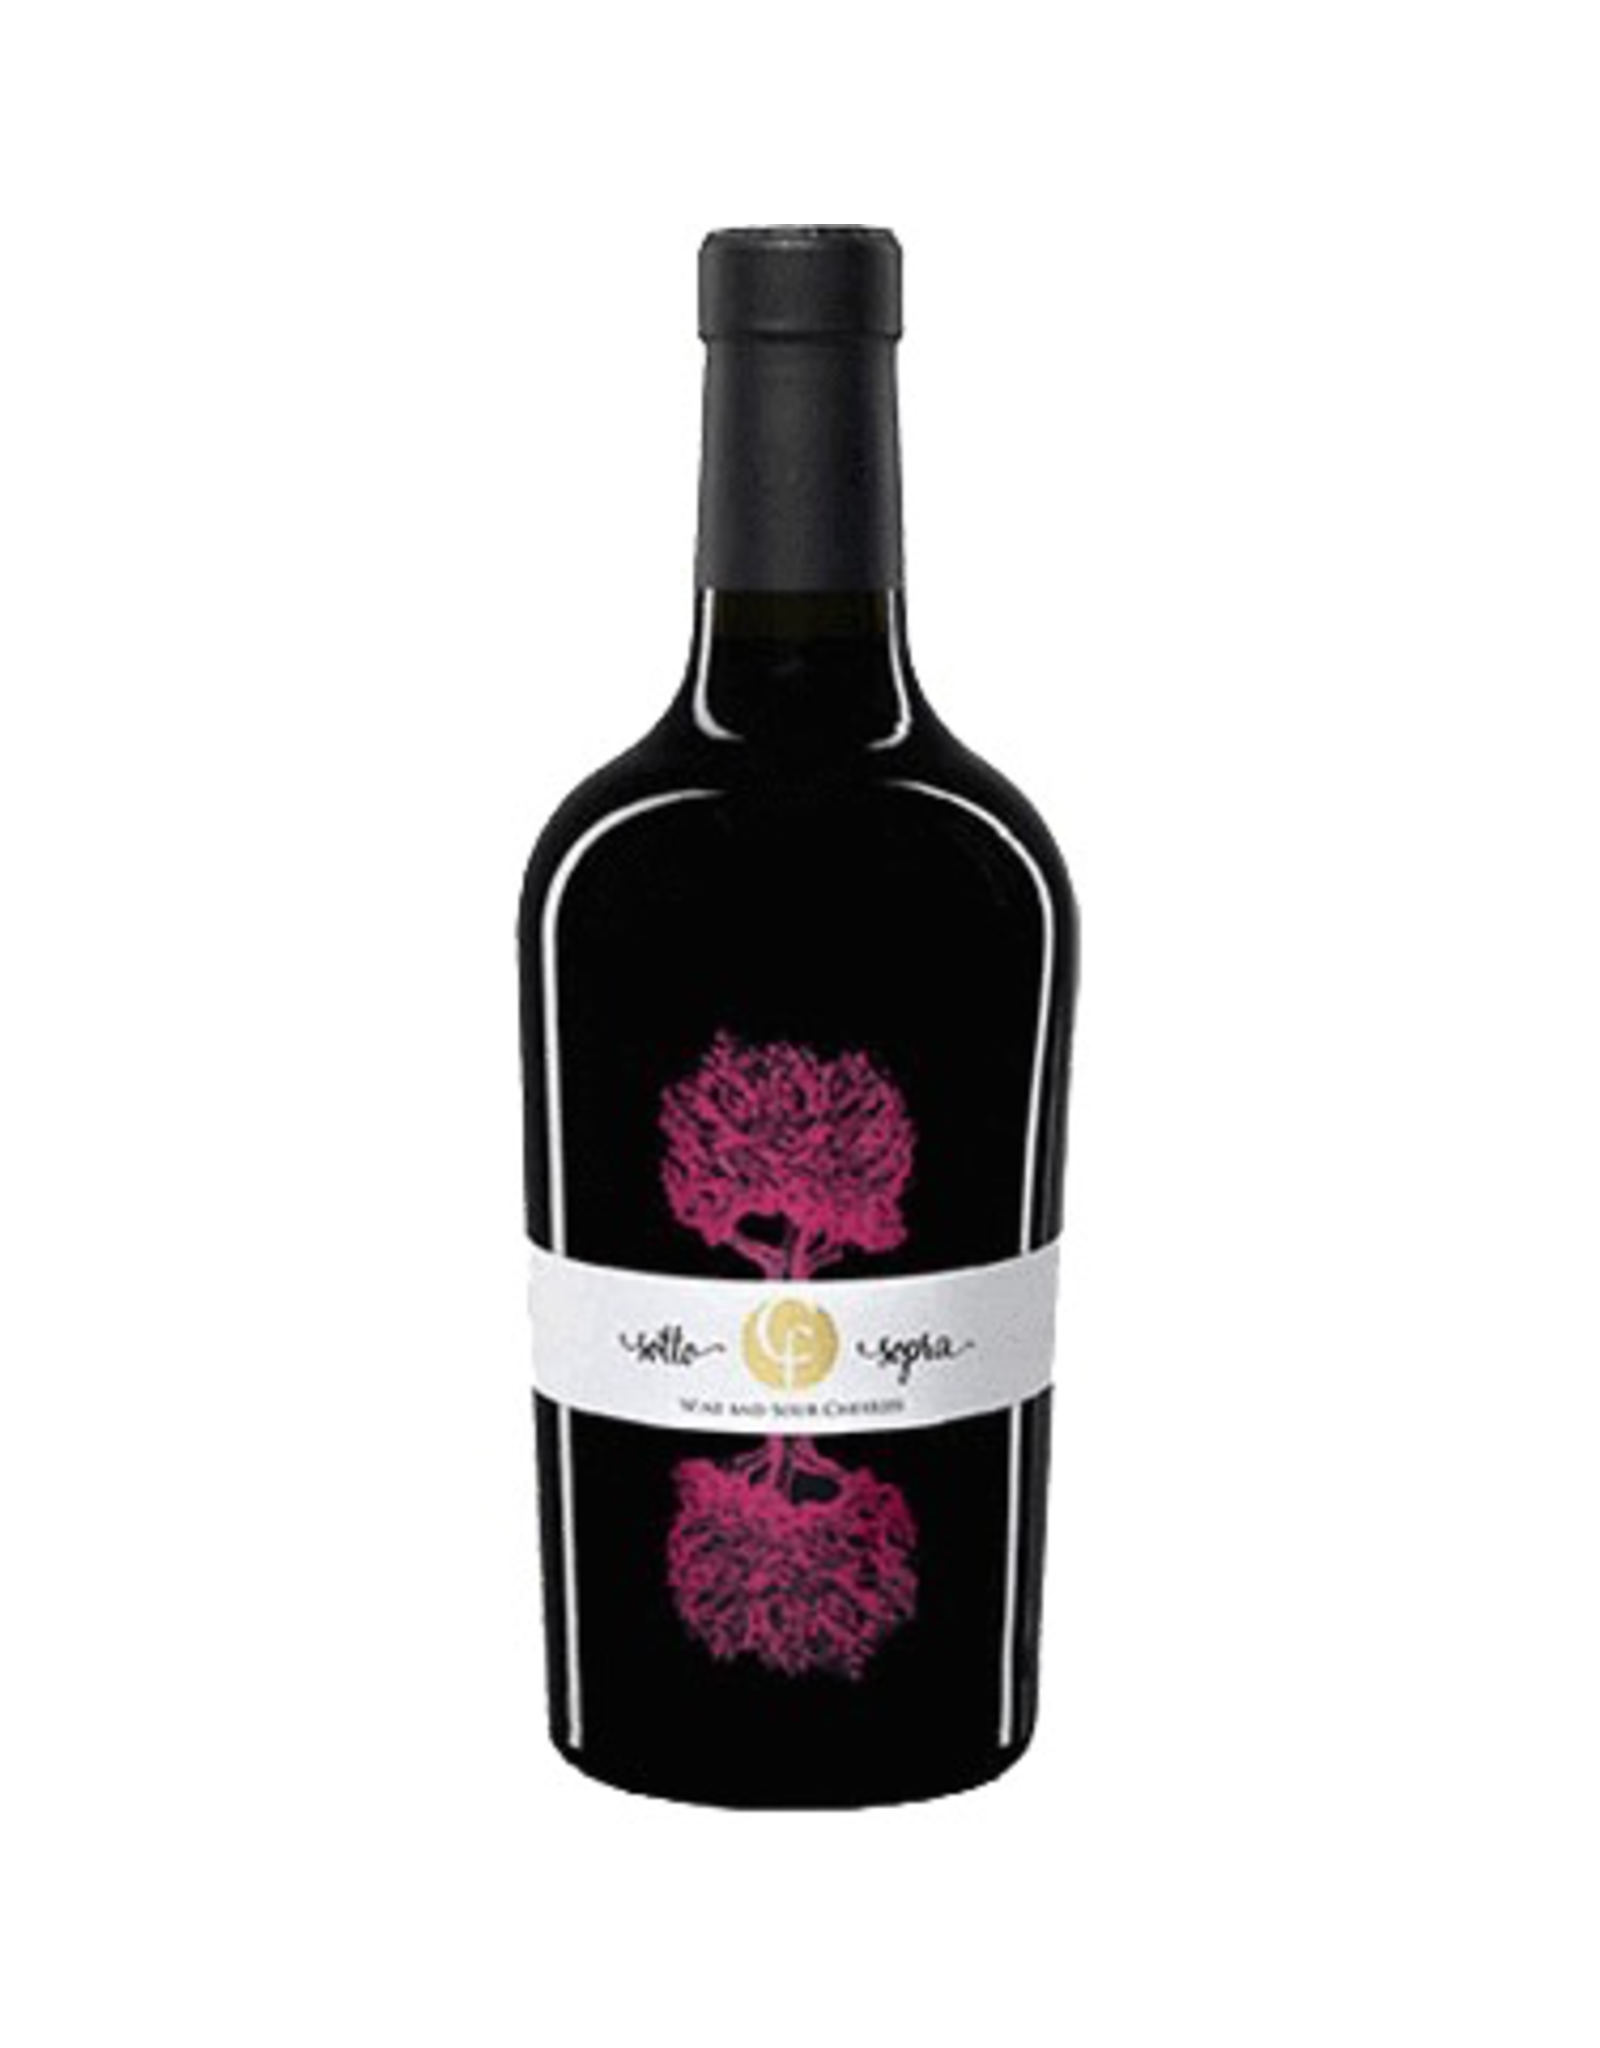 Red Wine 2010, Collefrisio Sottosopra, Montepulciano co-femented with Sour Cherries, Collefrisio, Abruzzo, Italy, 13% Alc,